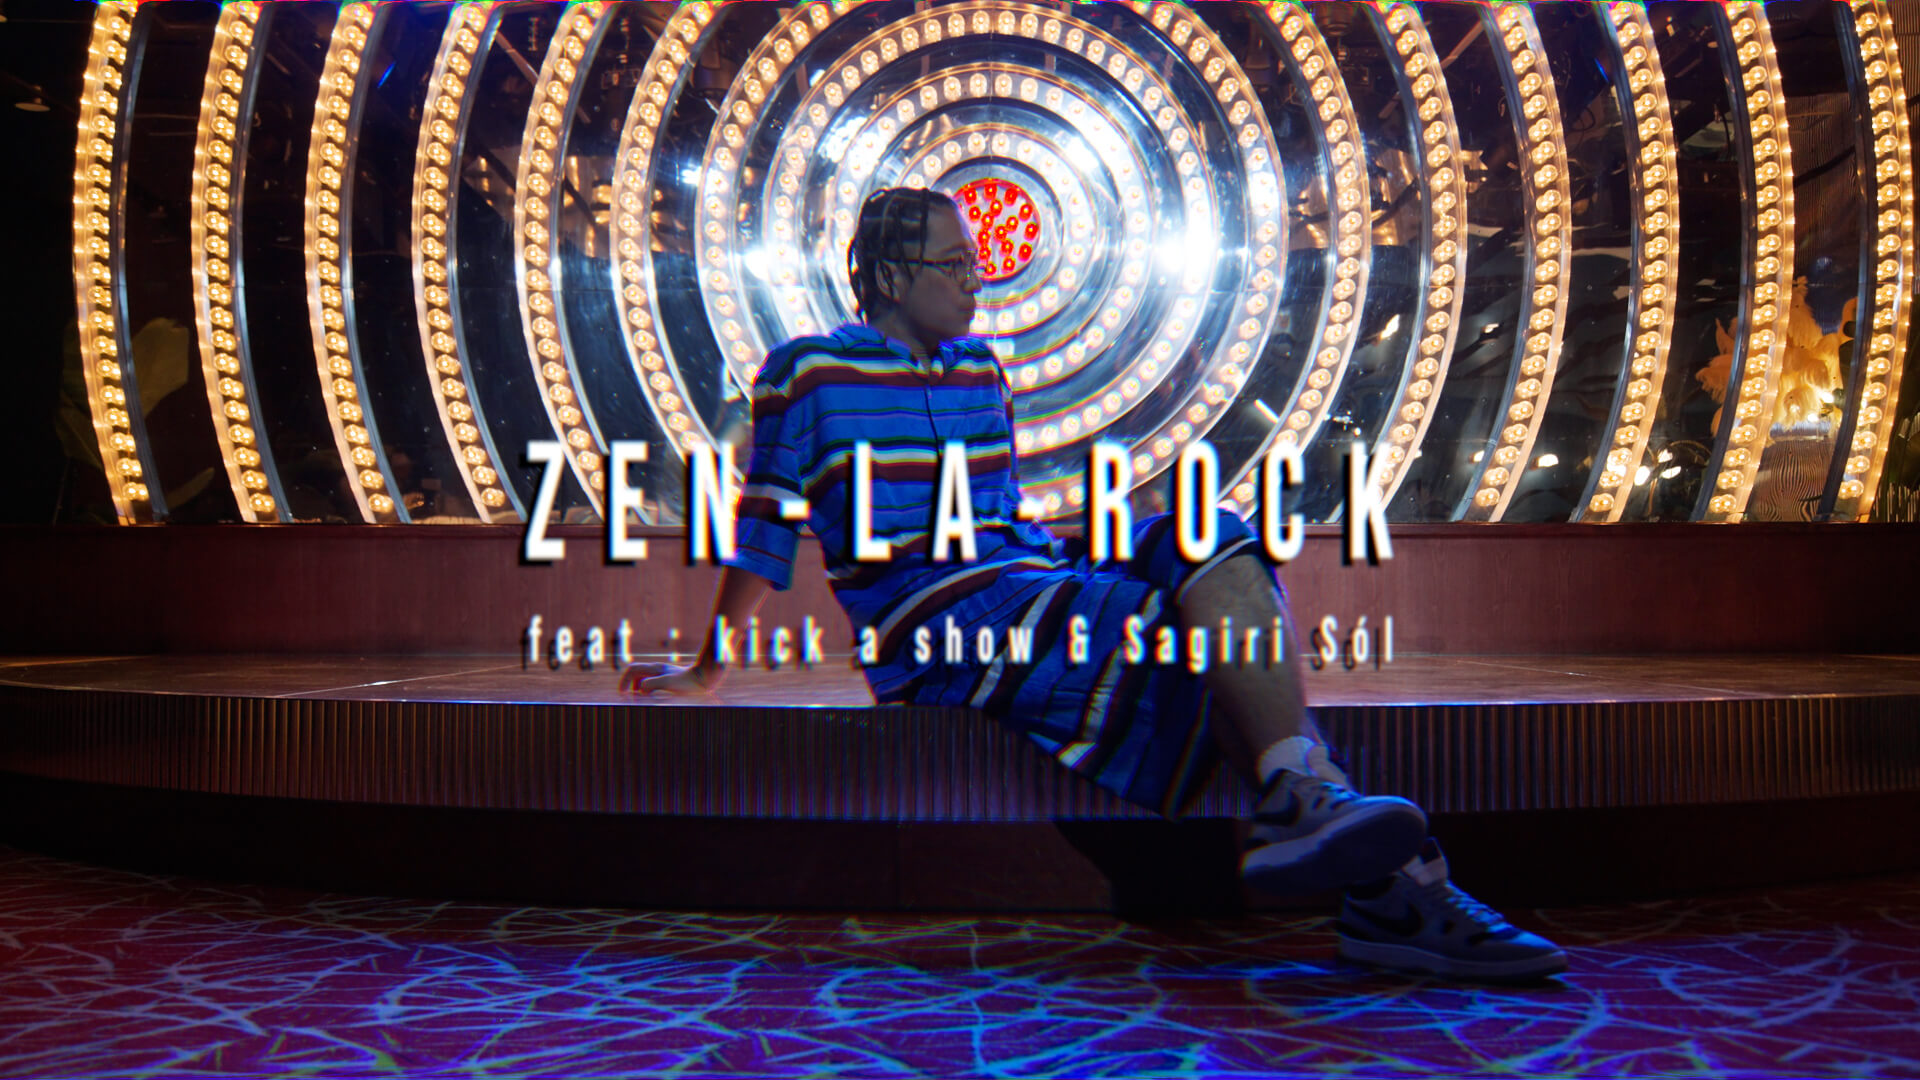 ZEN-LA-ROCK、400枚限定の7inch収録にも収録の「今夜はクラシックス」MVを公開｜grooveman Spotがプロデュース、Kick a Show、Sagiri Sól、KASHIFらも参加 music231024-zen-la-rock3